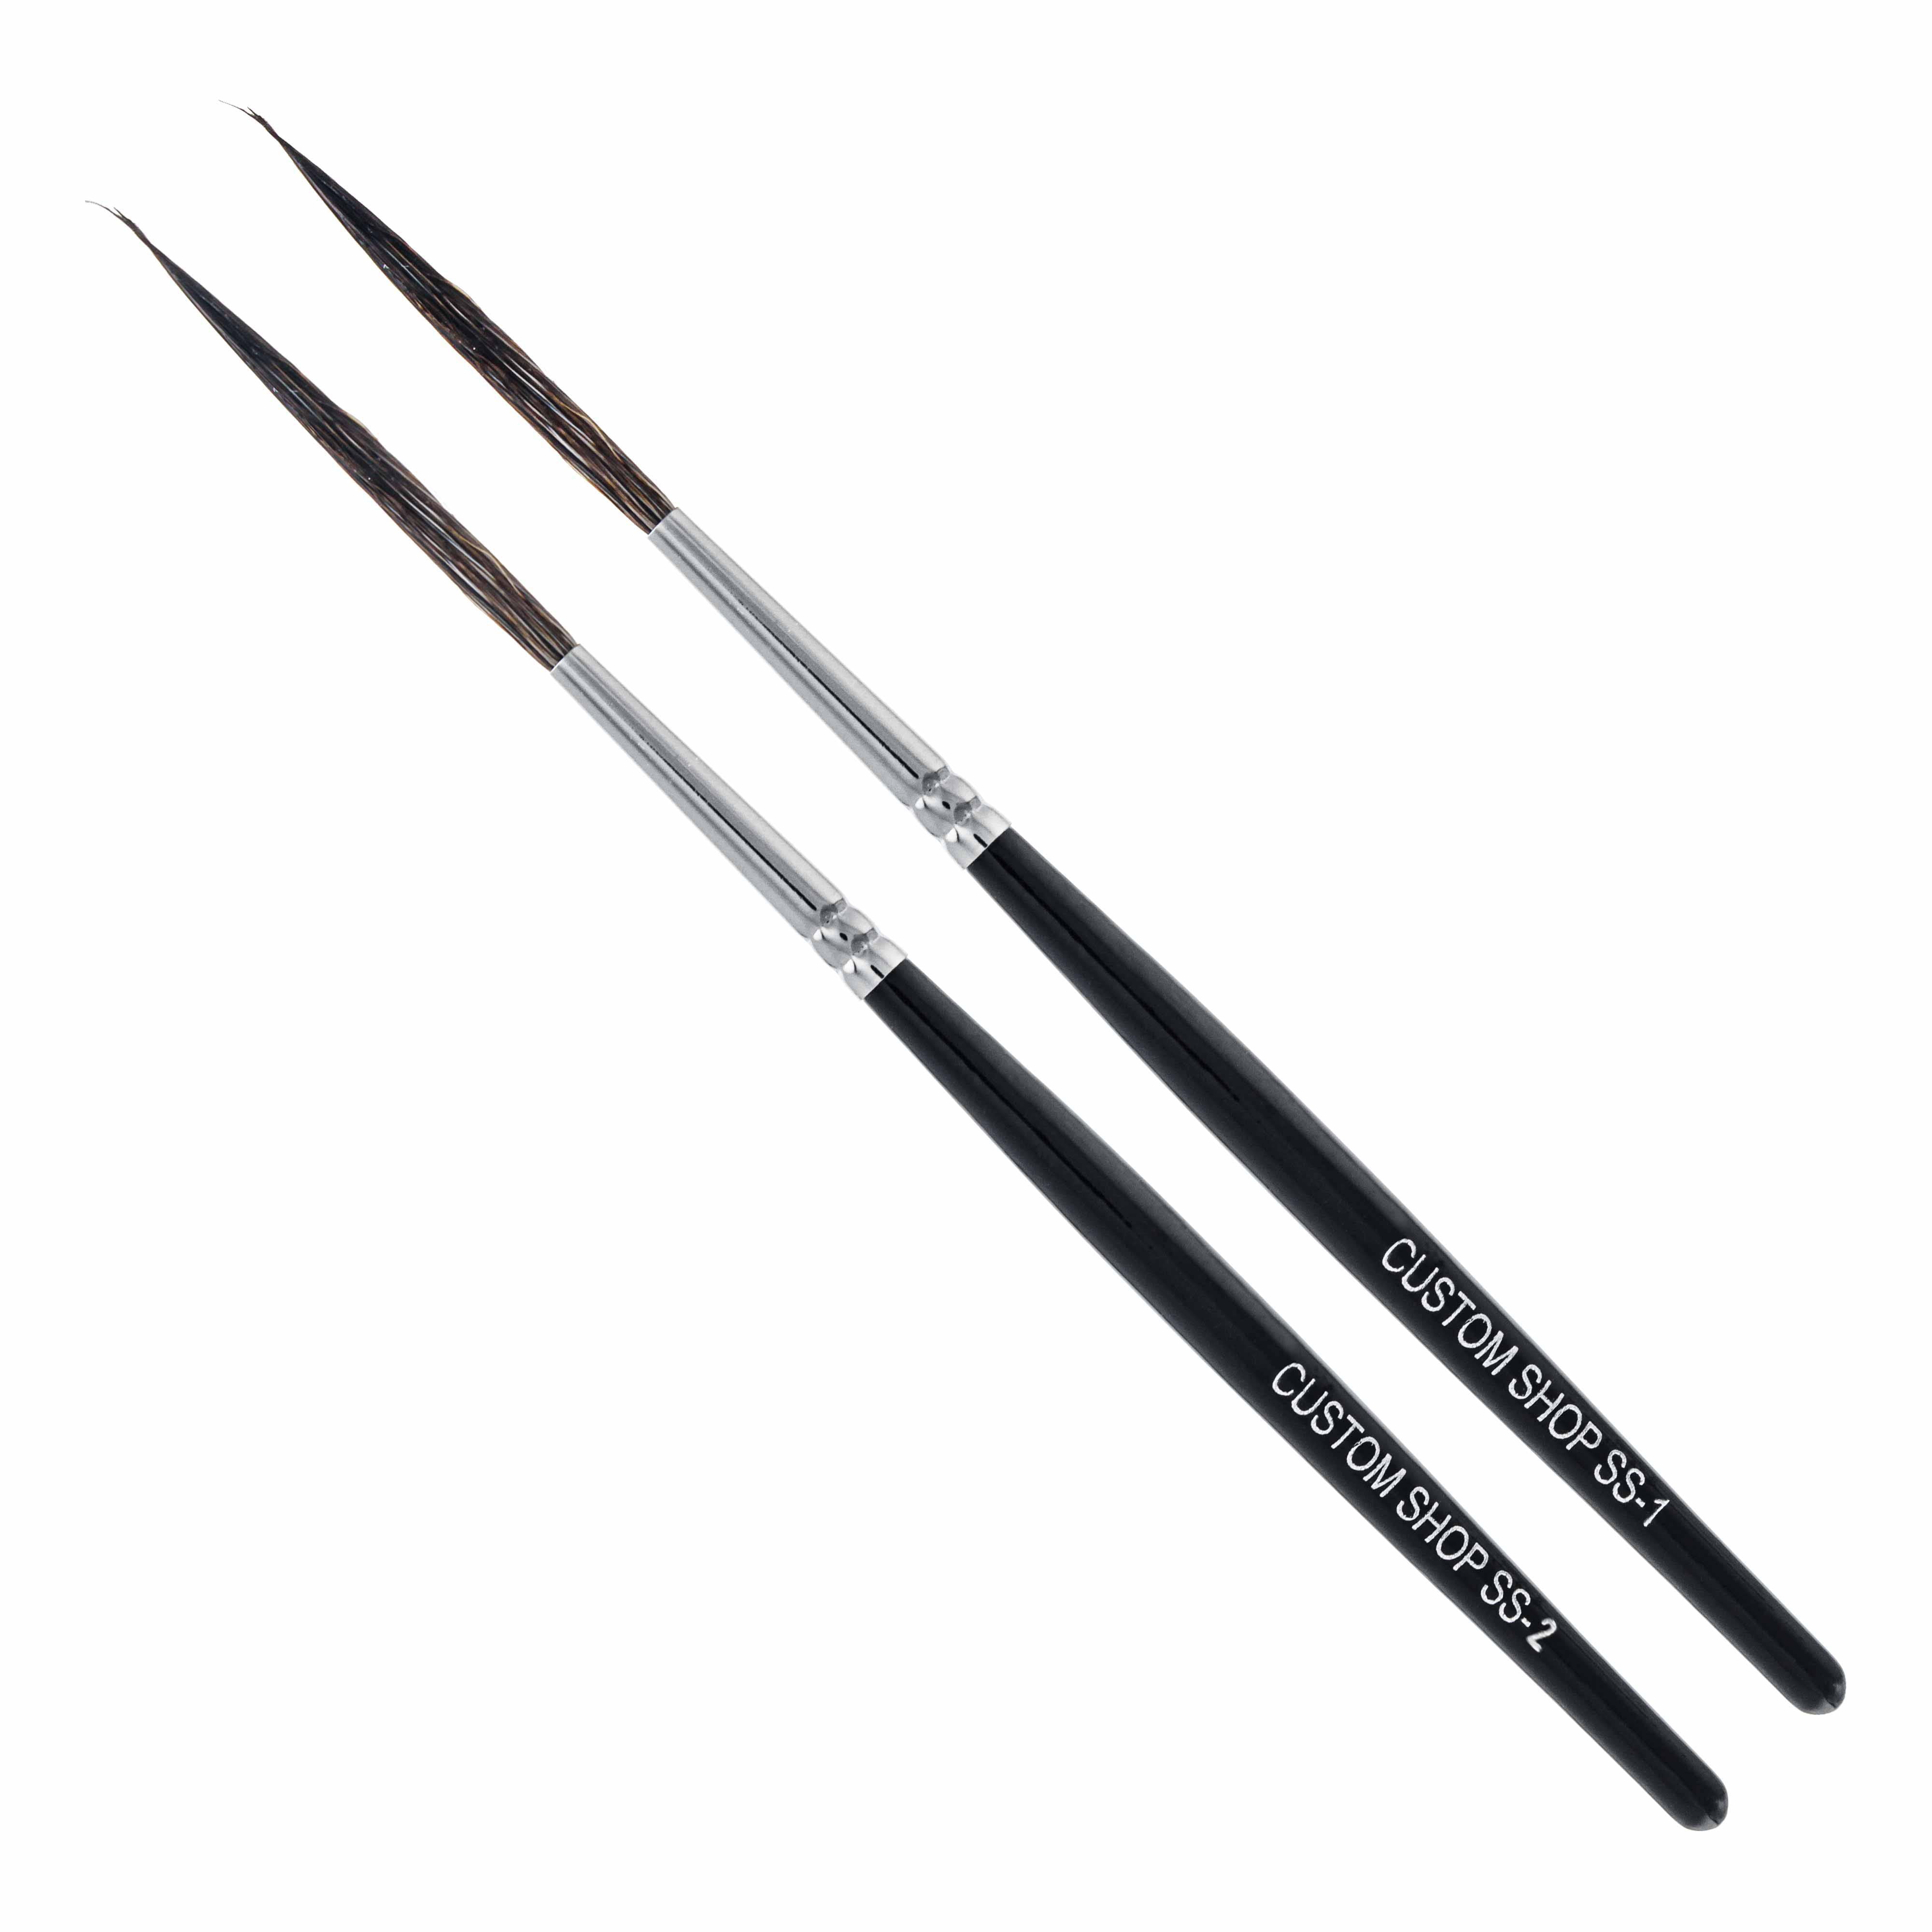 6) Andrew Mack Brush Sword Striping Series 10 Sizes 000-3